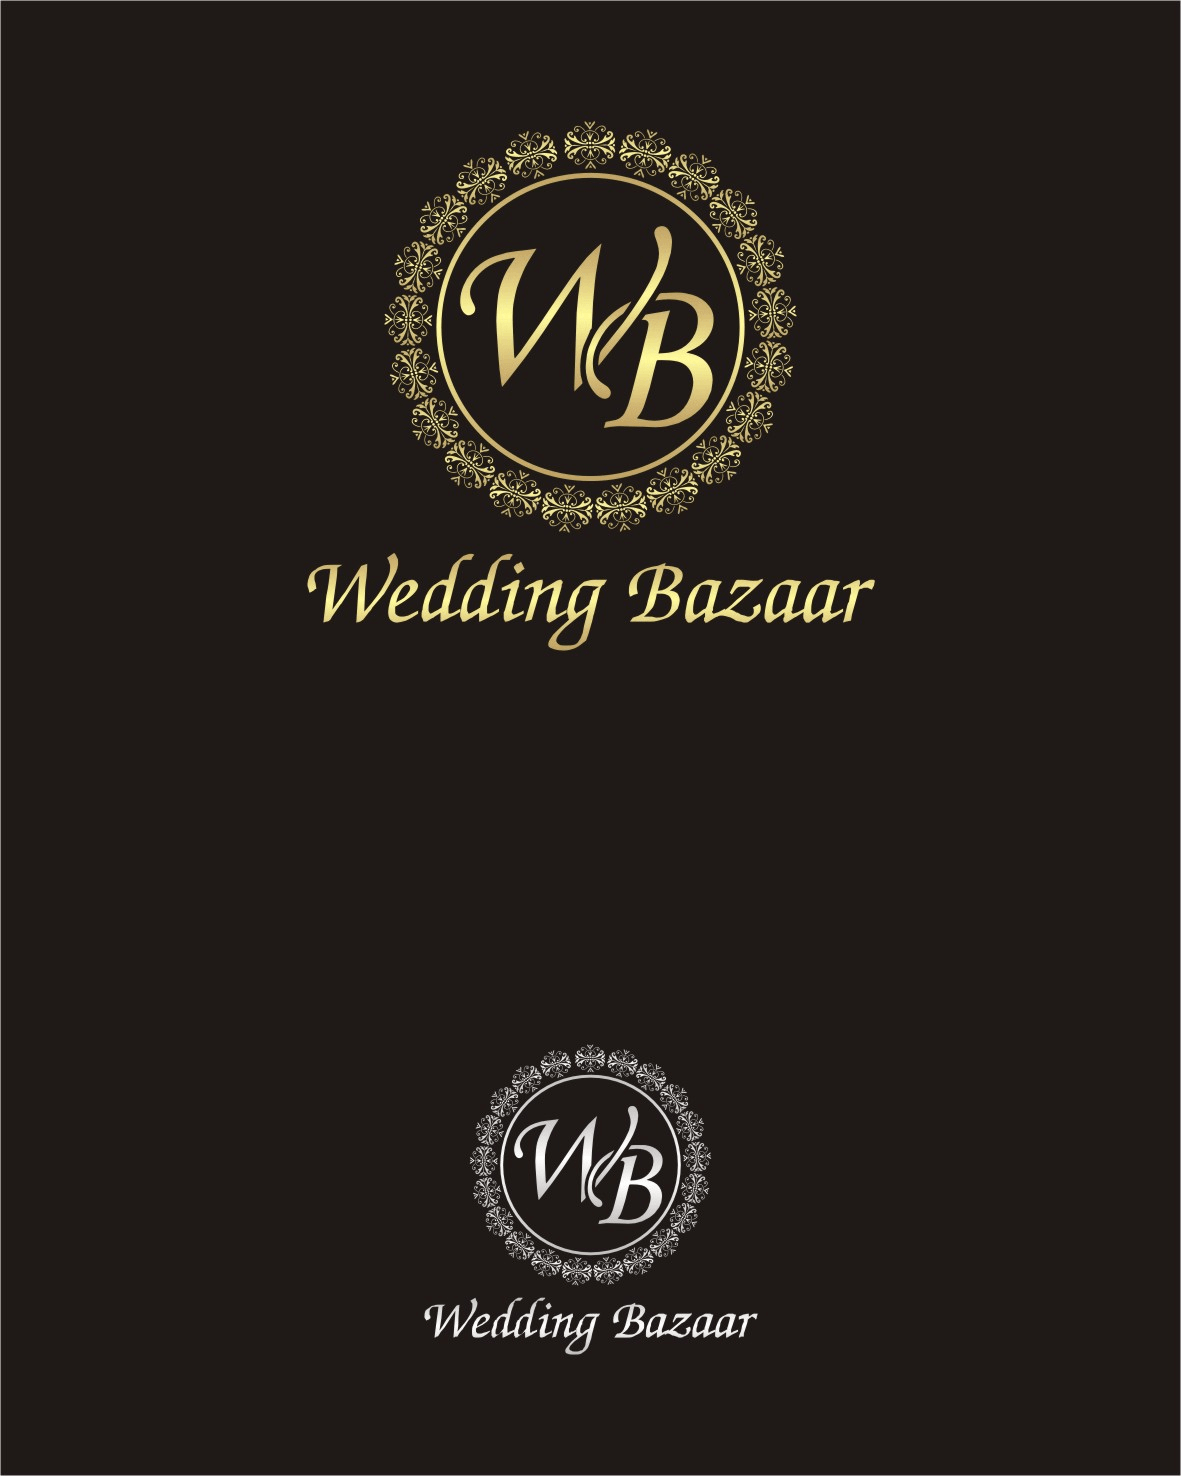 Spider -Man 2 Logo - Logo Design Contests Imaginative Logo Design for Wedding Bazaar